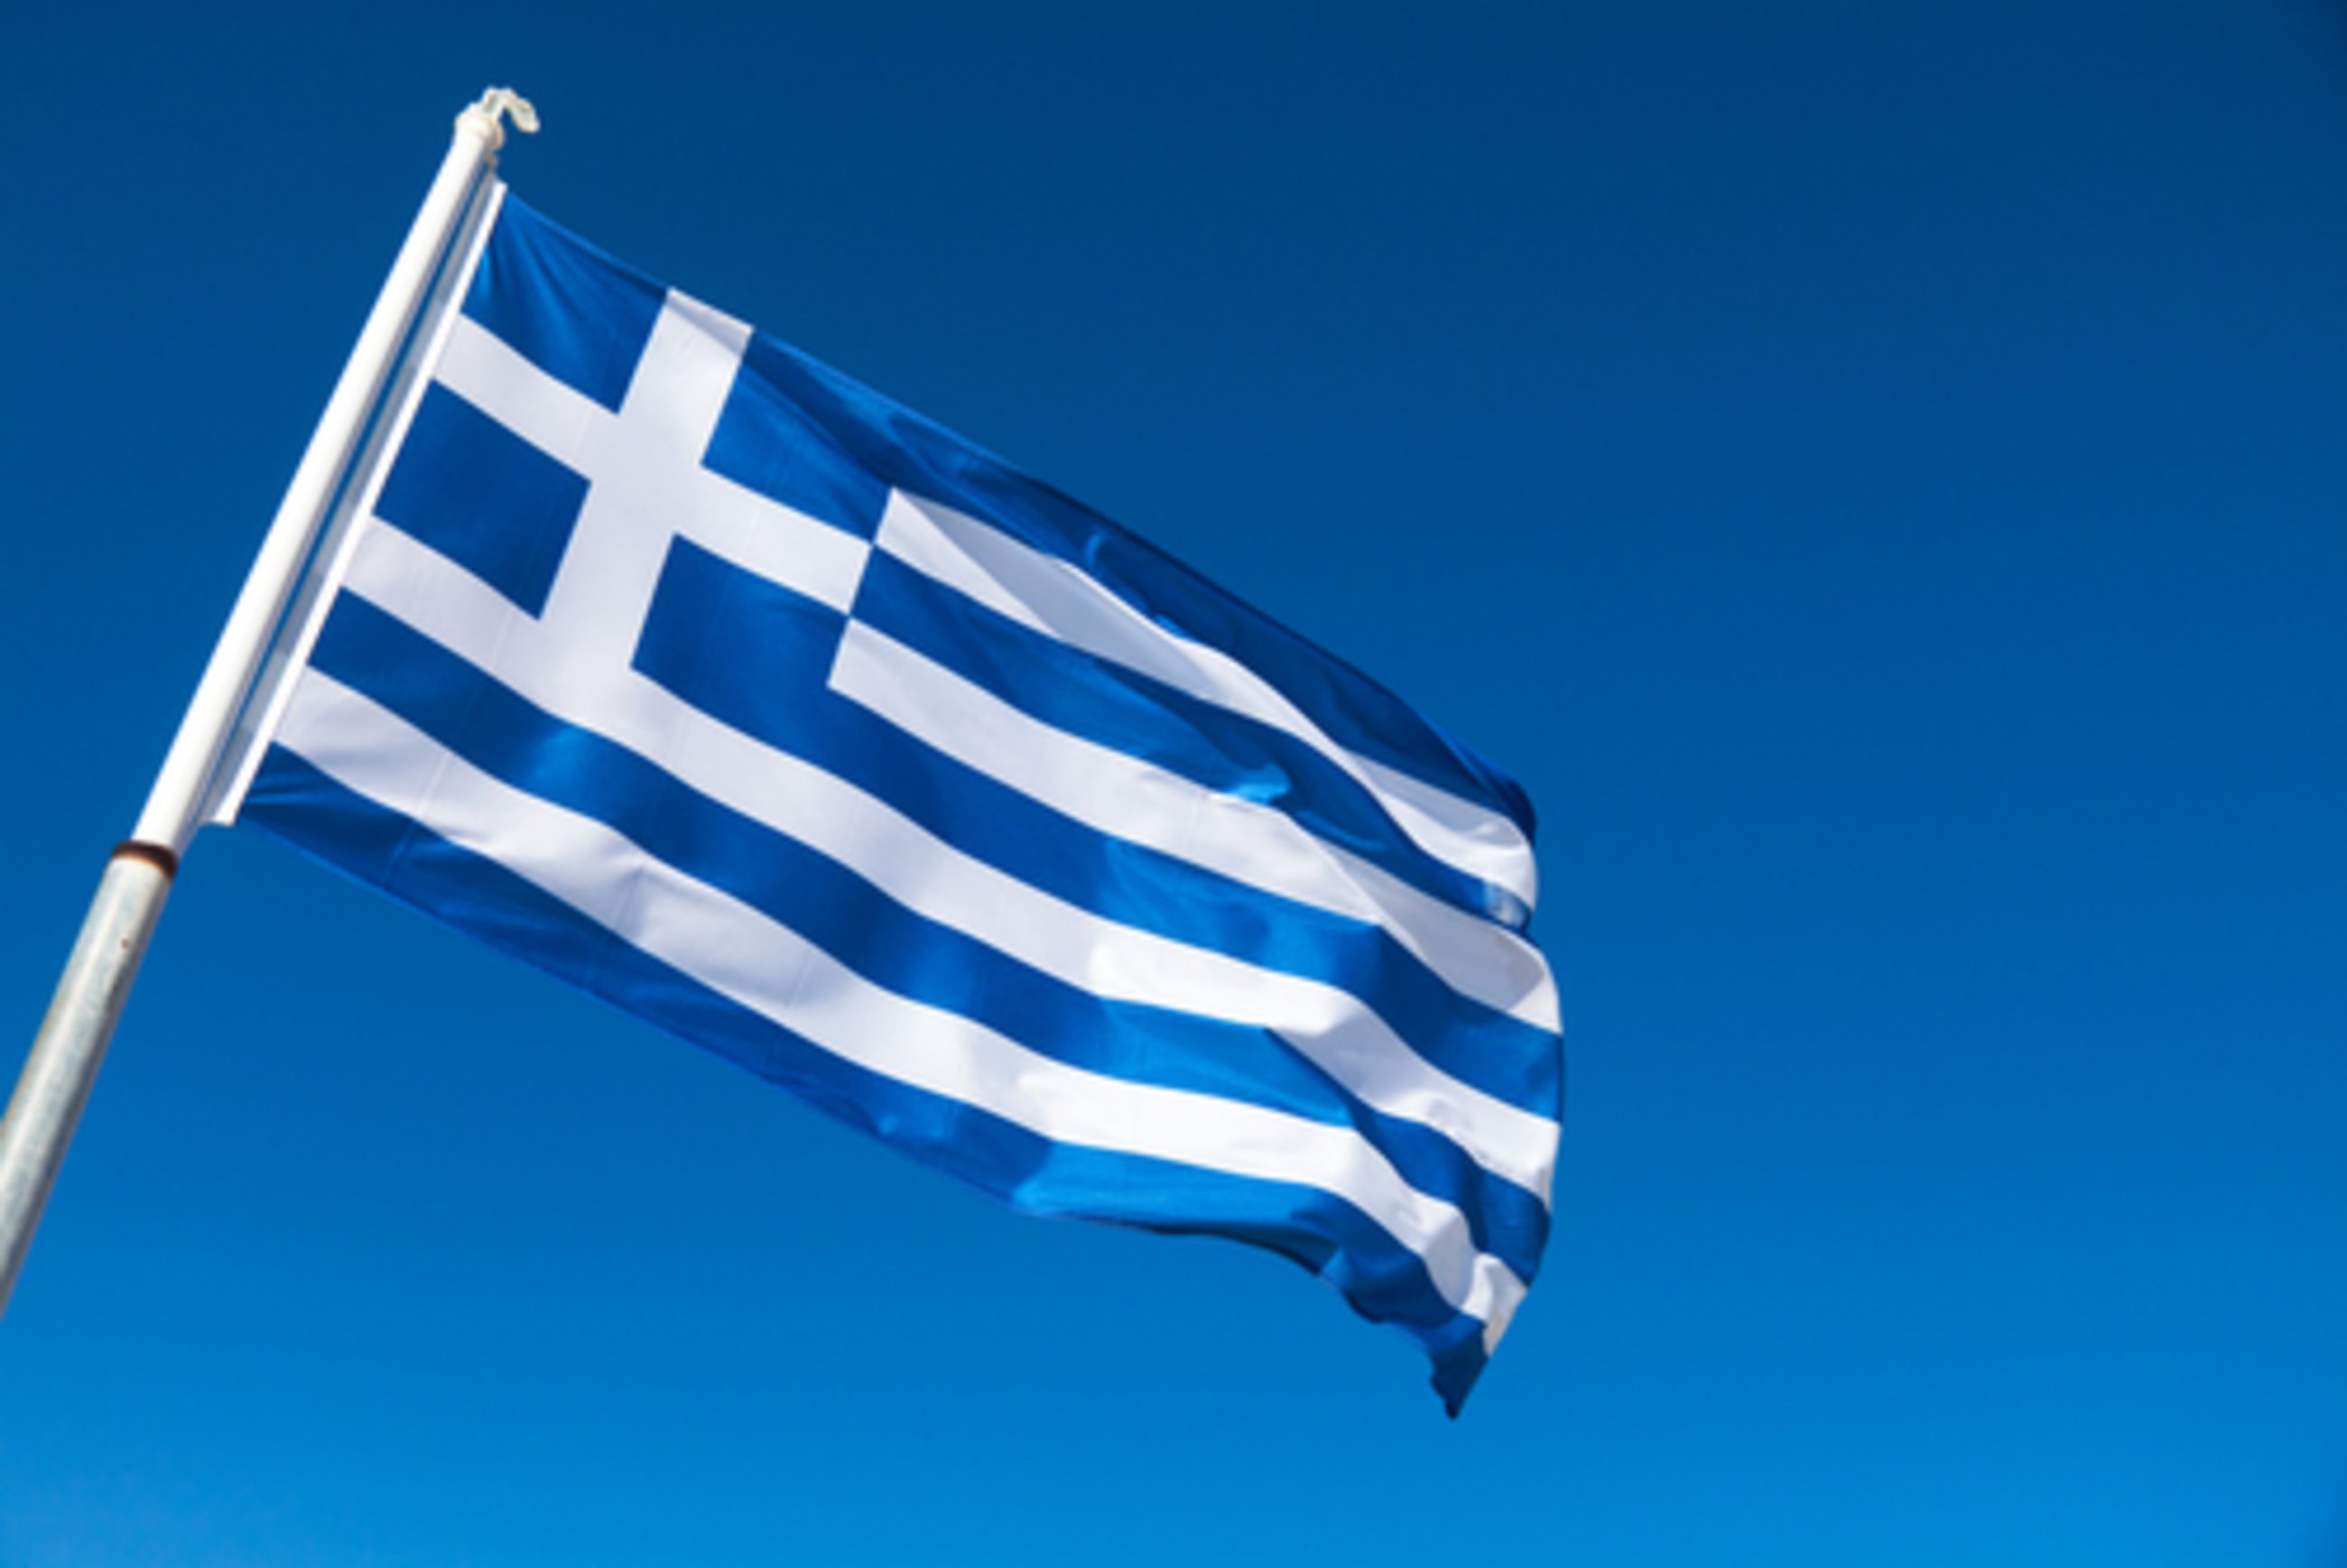 cepDefault-Index Greece 2018